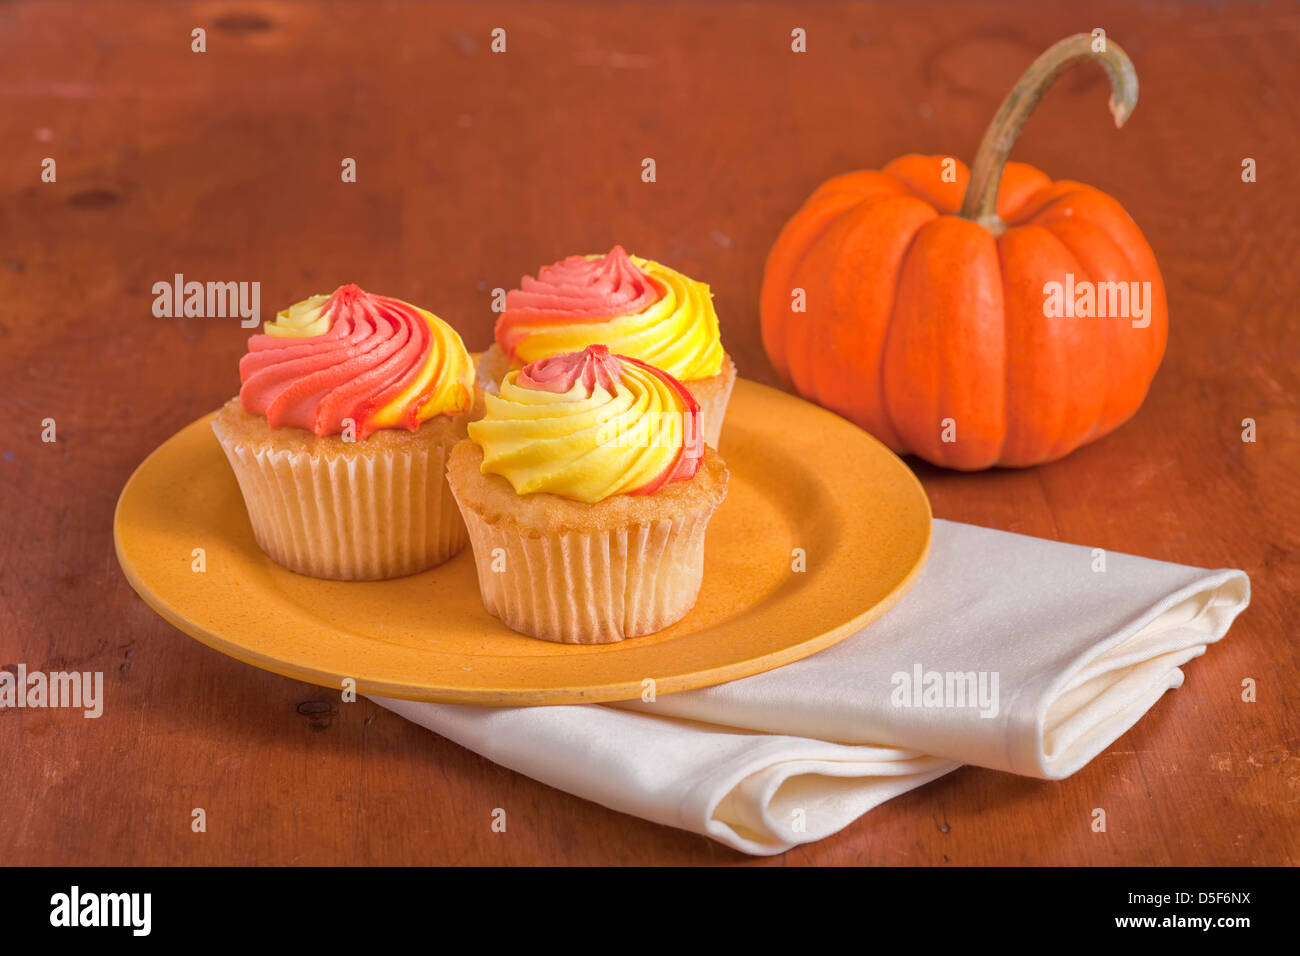 Cupcakes dekoriert um Halloween zu feiern. Stockfoto